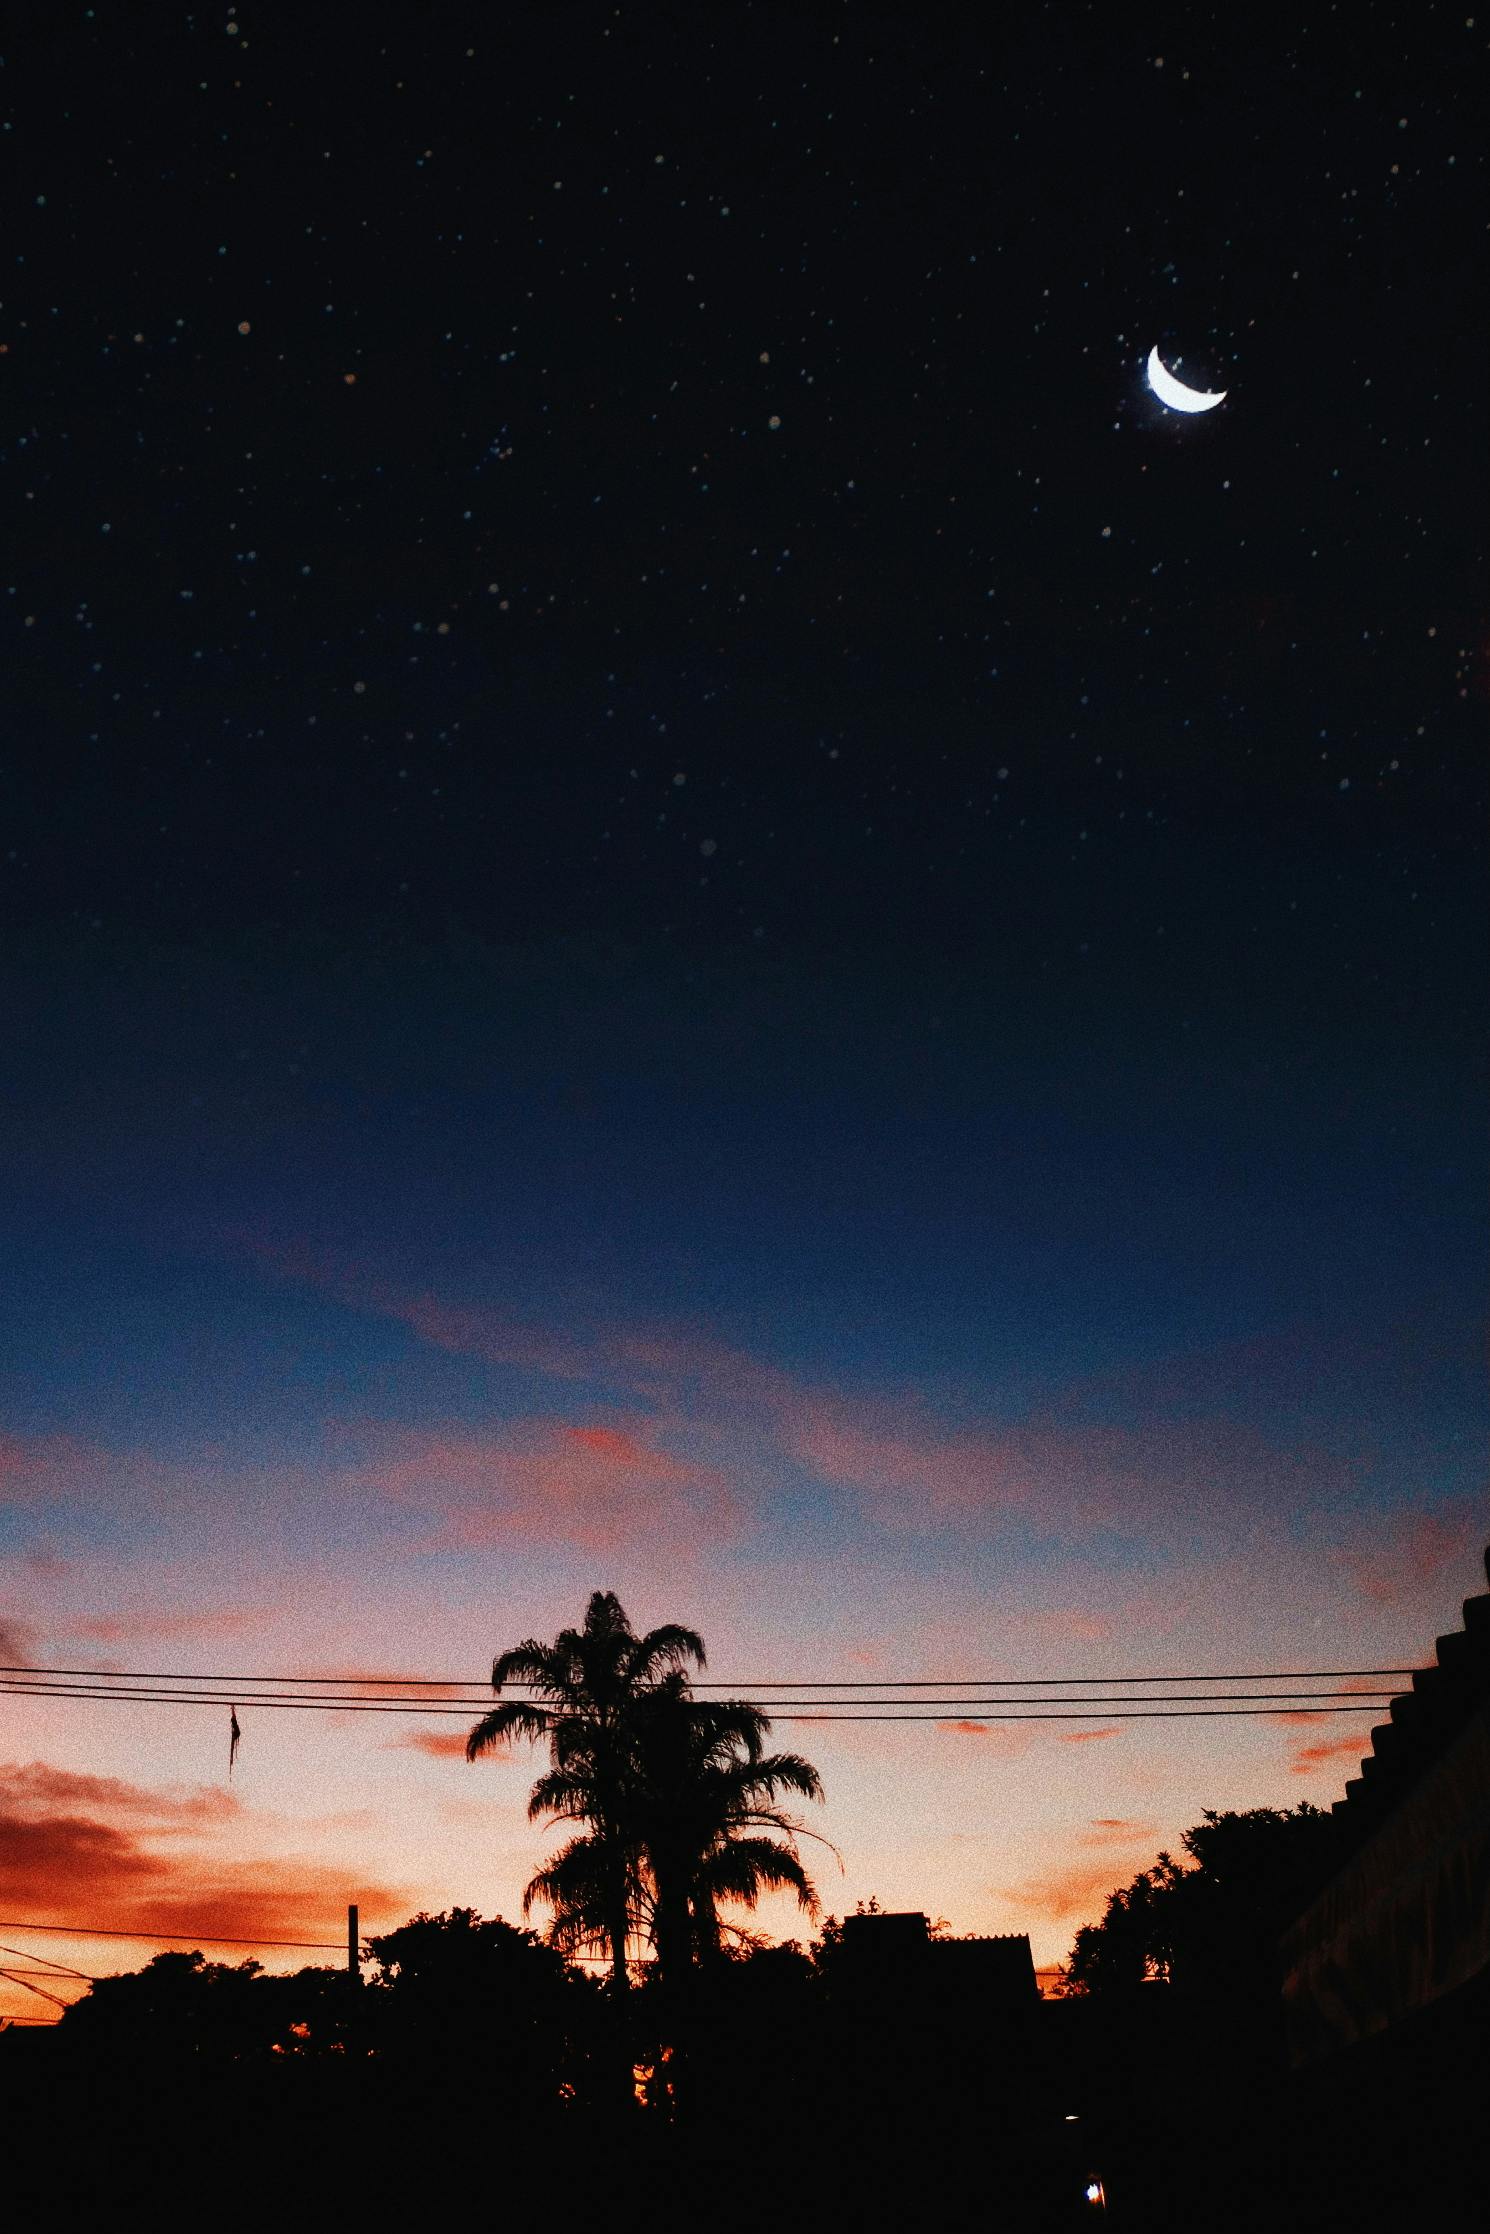 nighttime sky wallpaper